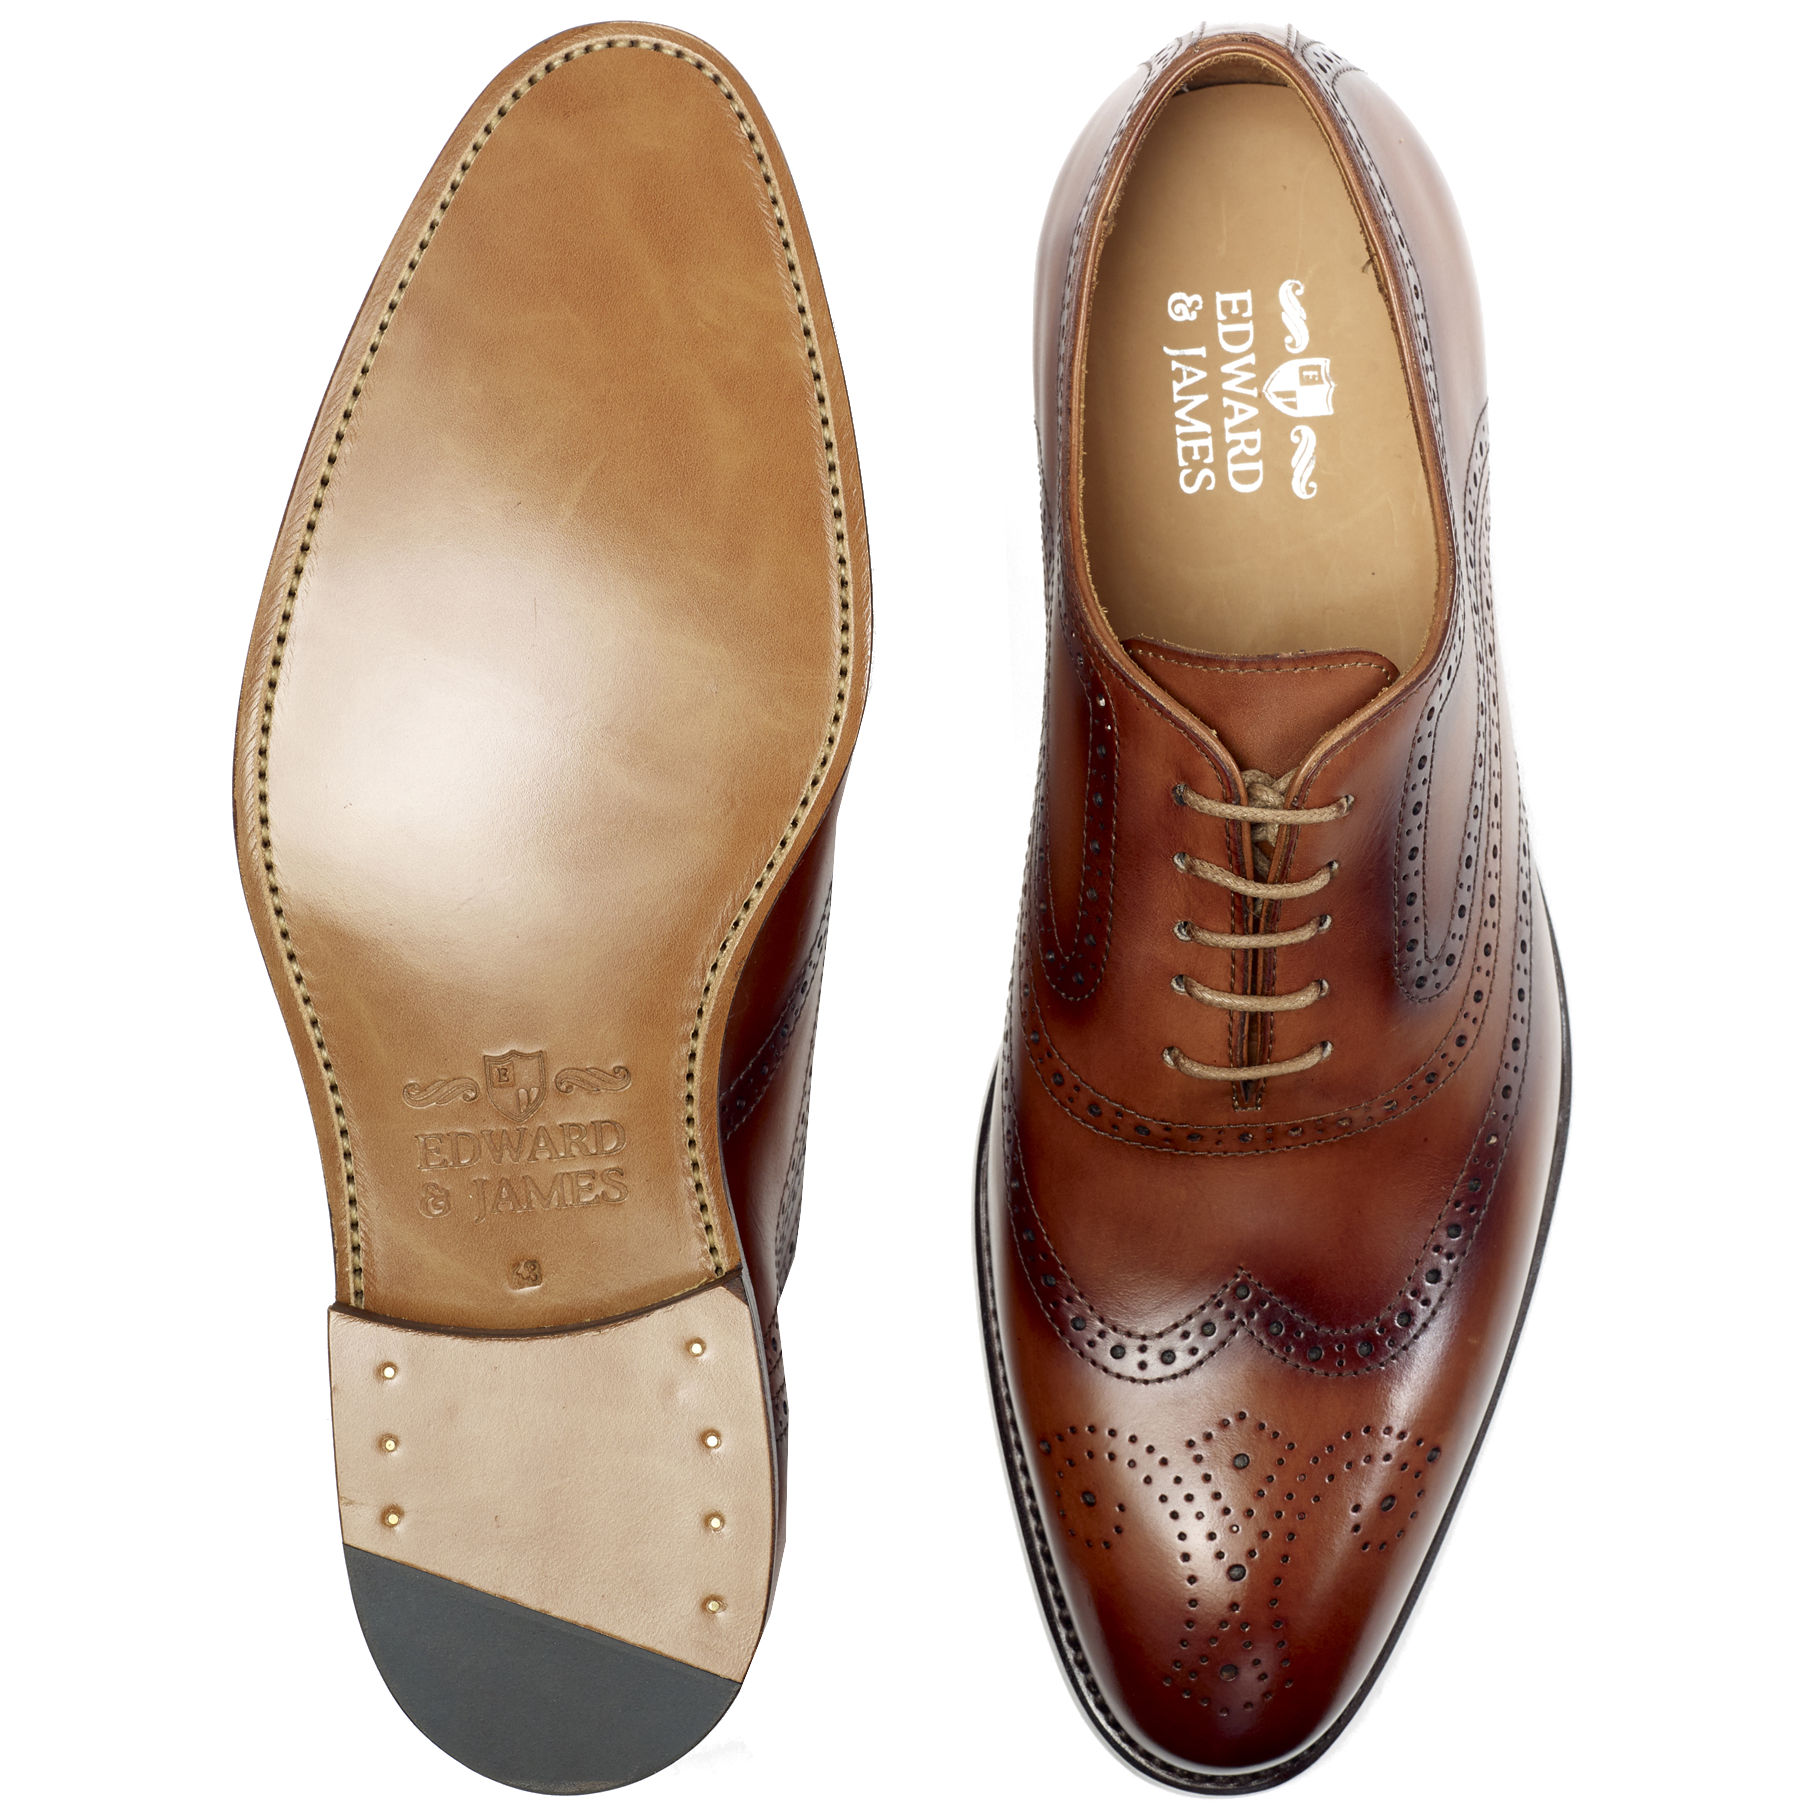 Edward and James Sintra - Pediwear Footwear